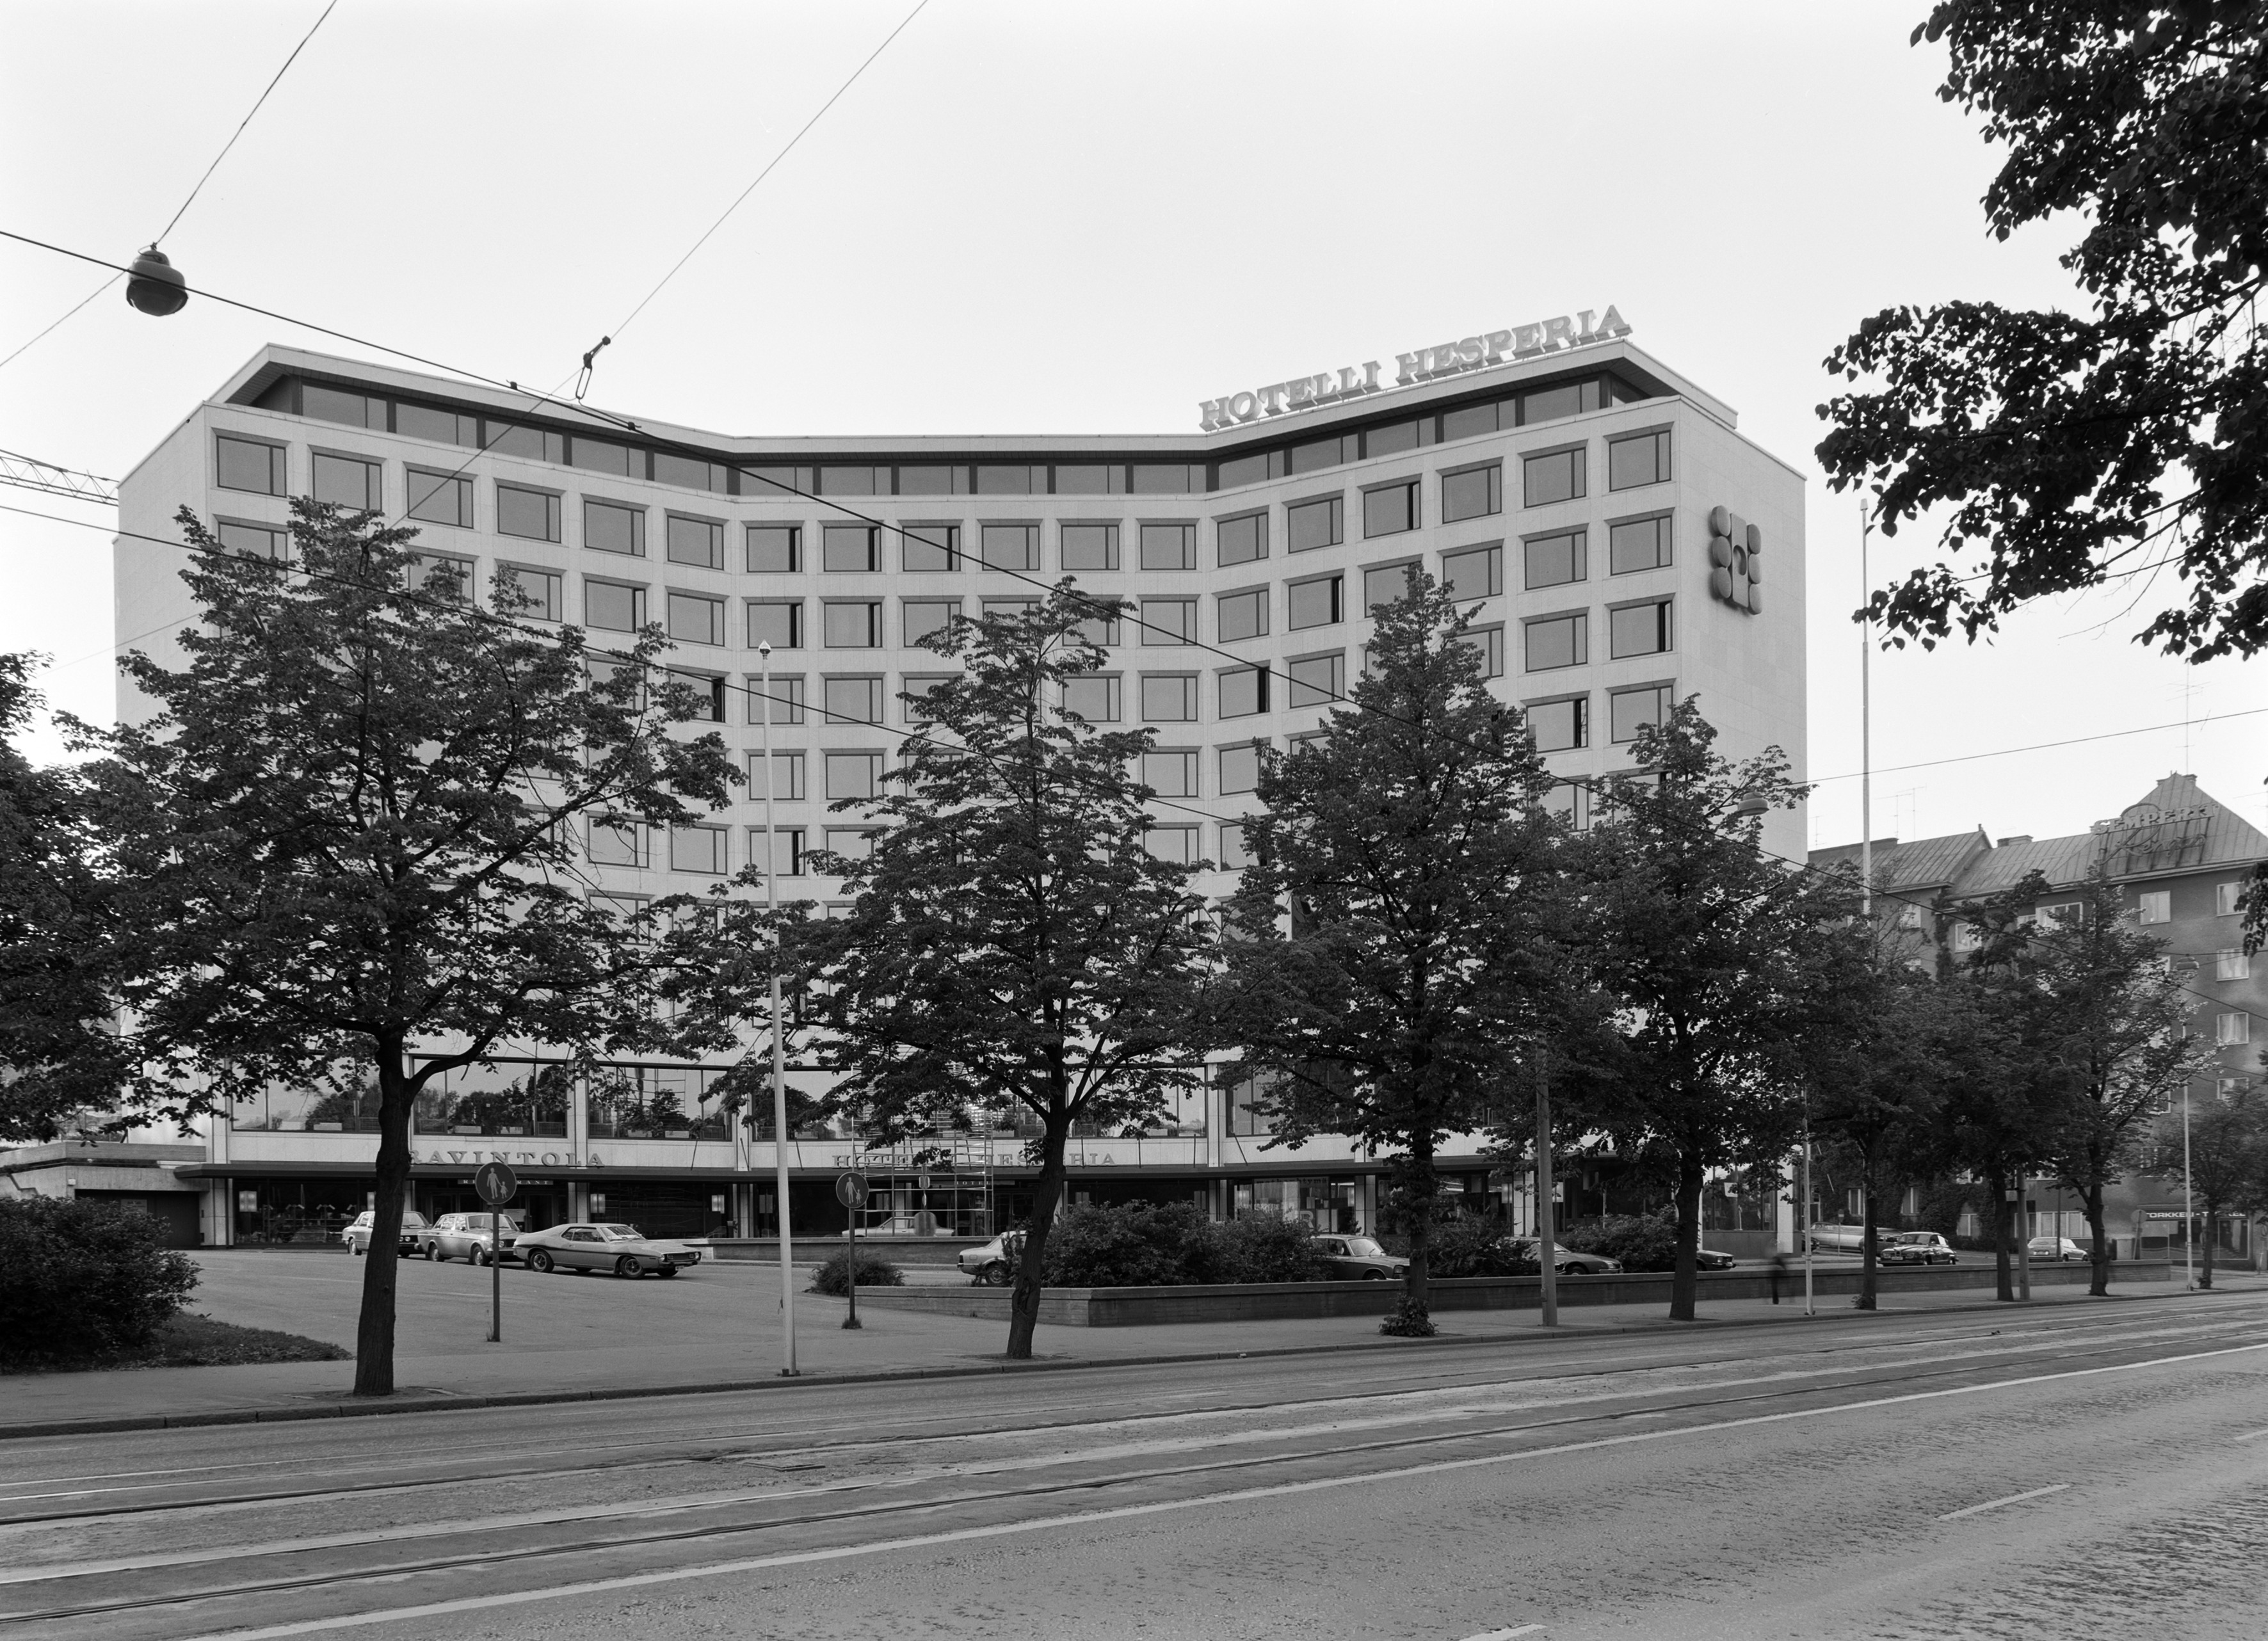 Mannerheimintie 48-50, Hotelli Hesperia.